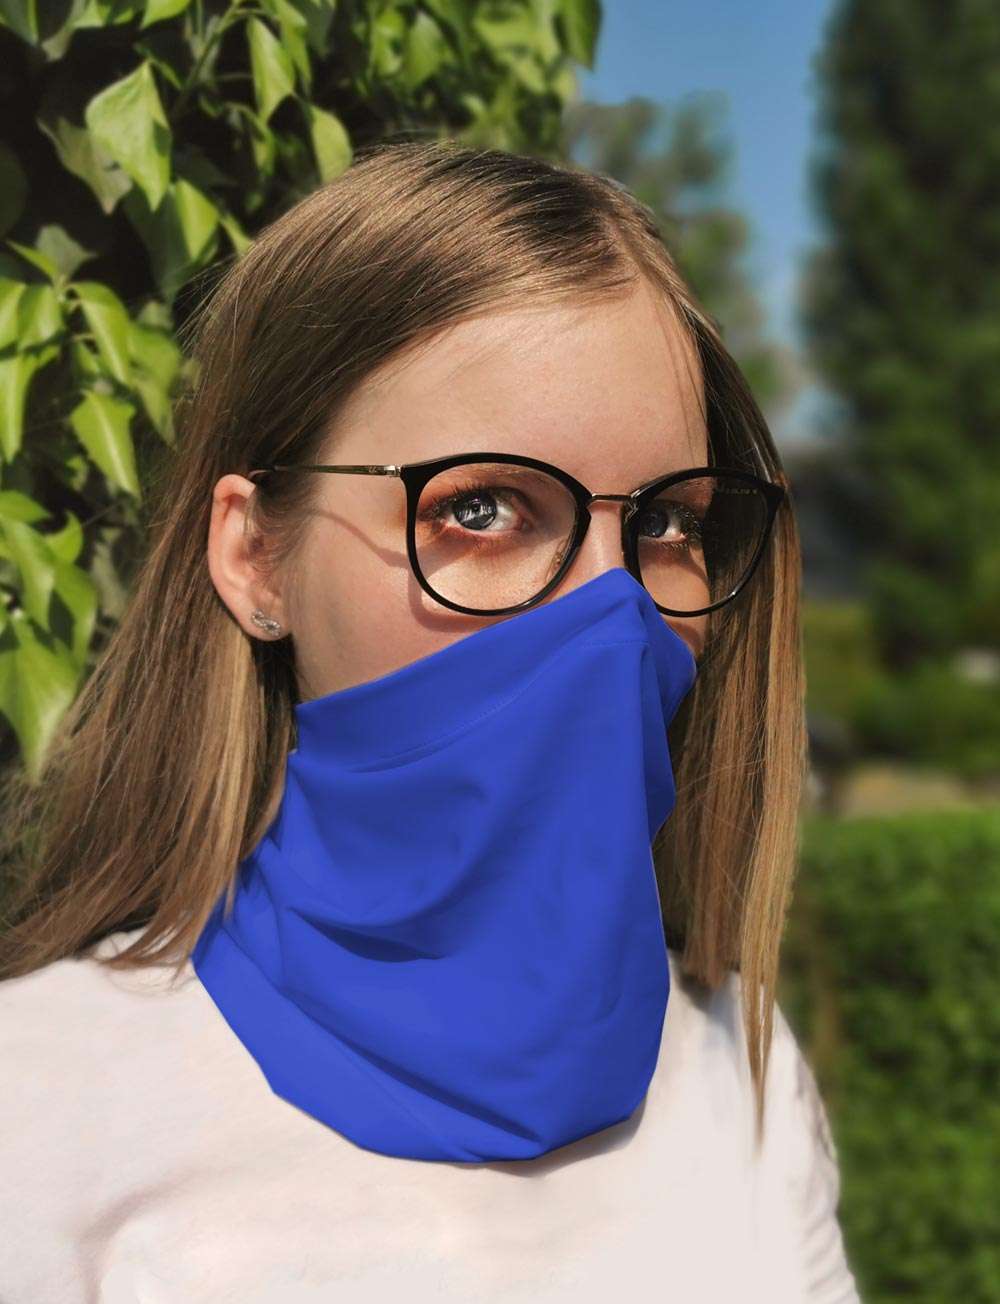 Tube Community Maske blau über die Nase im Freien